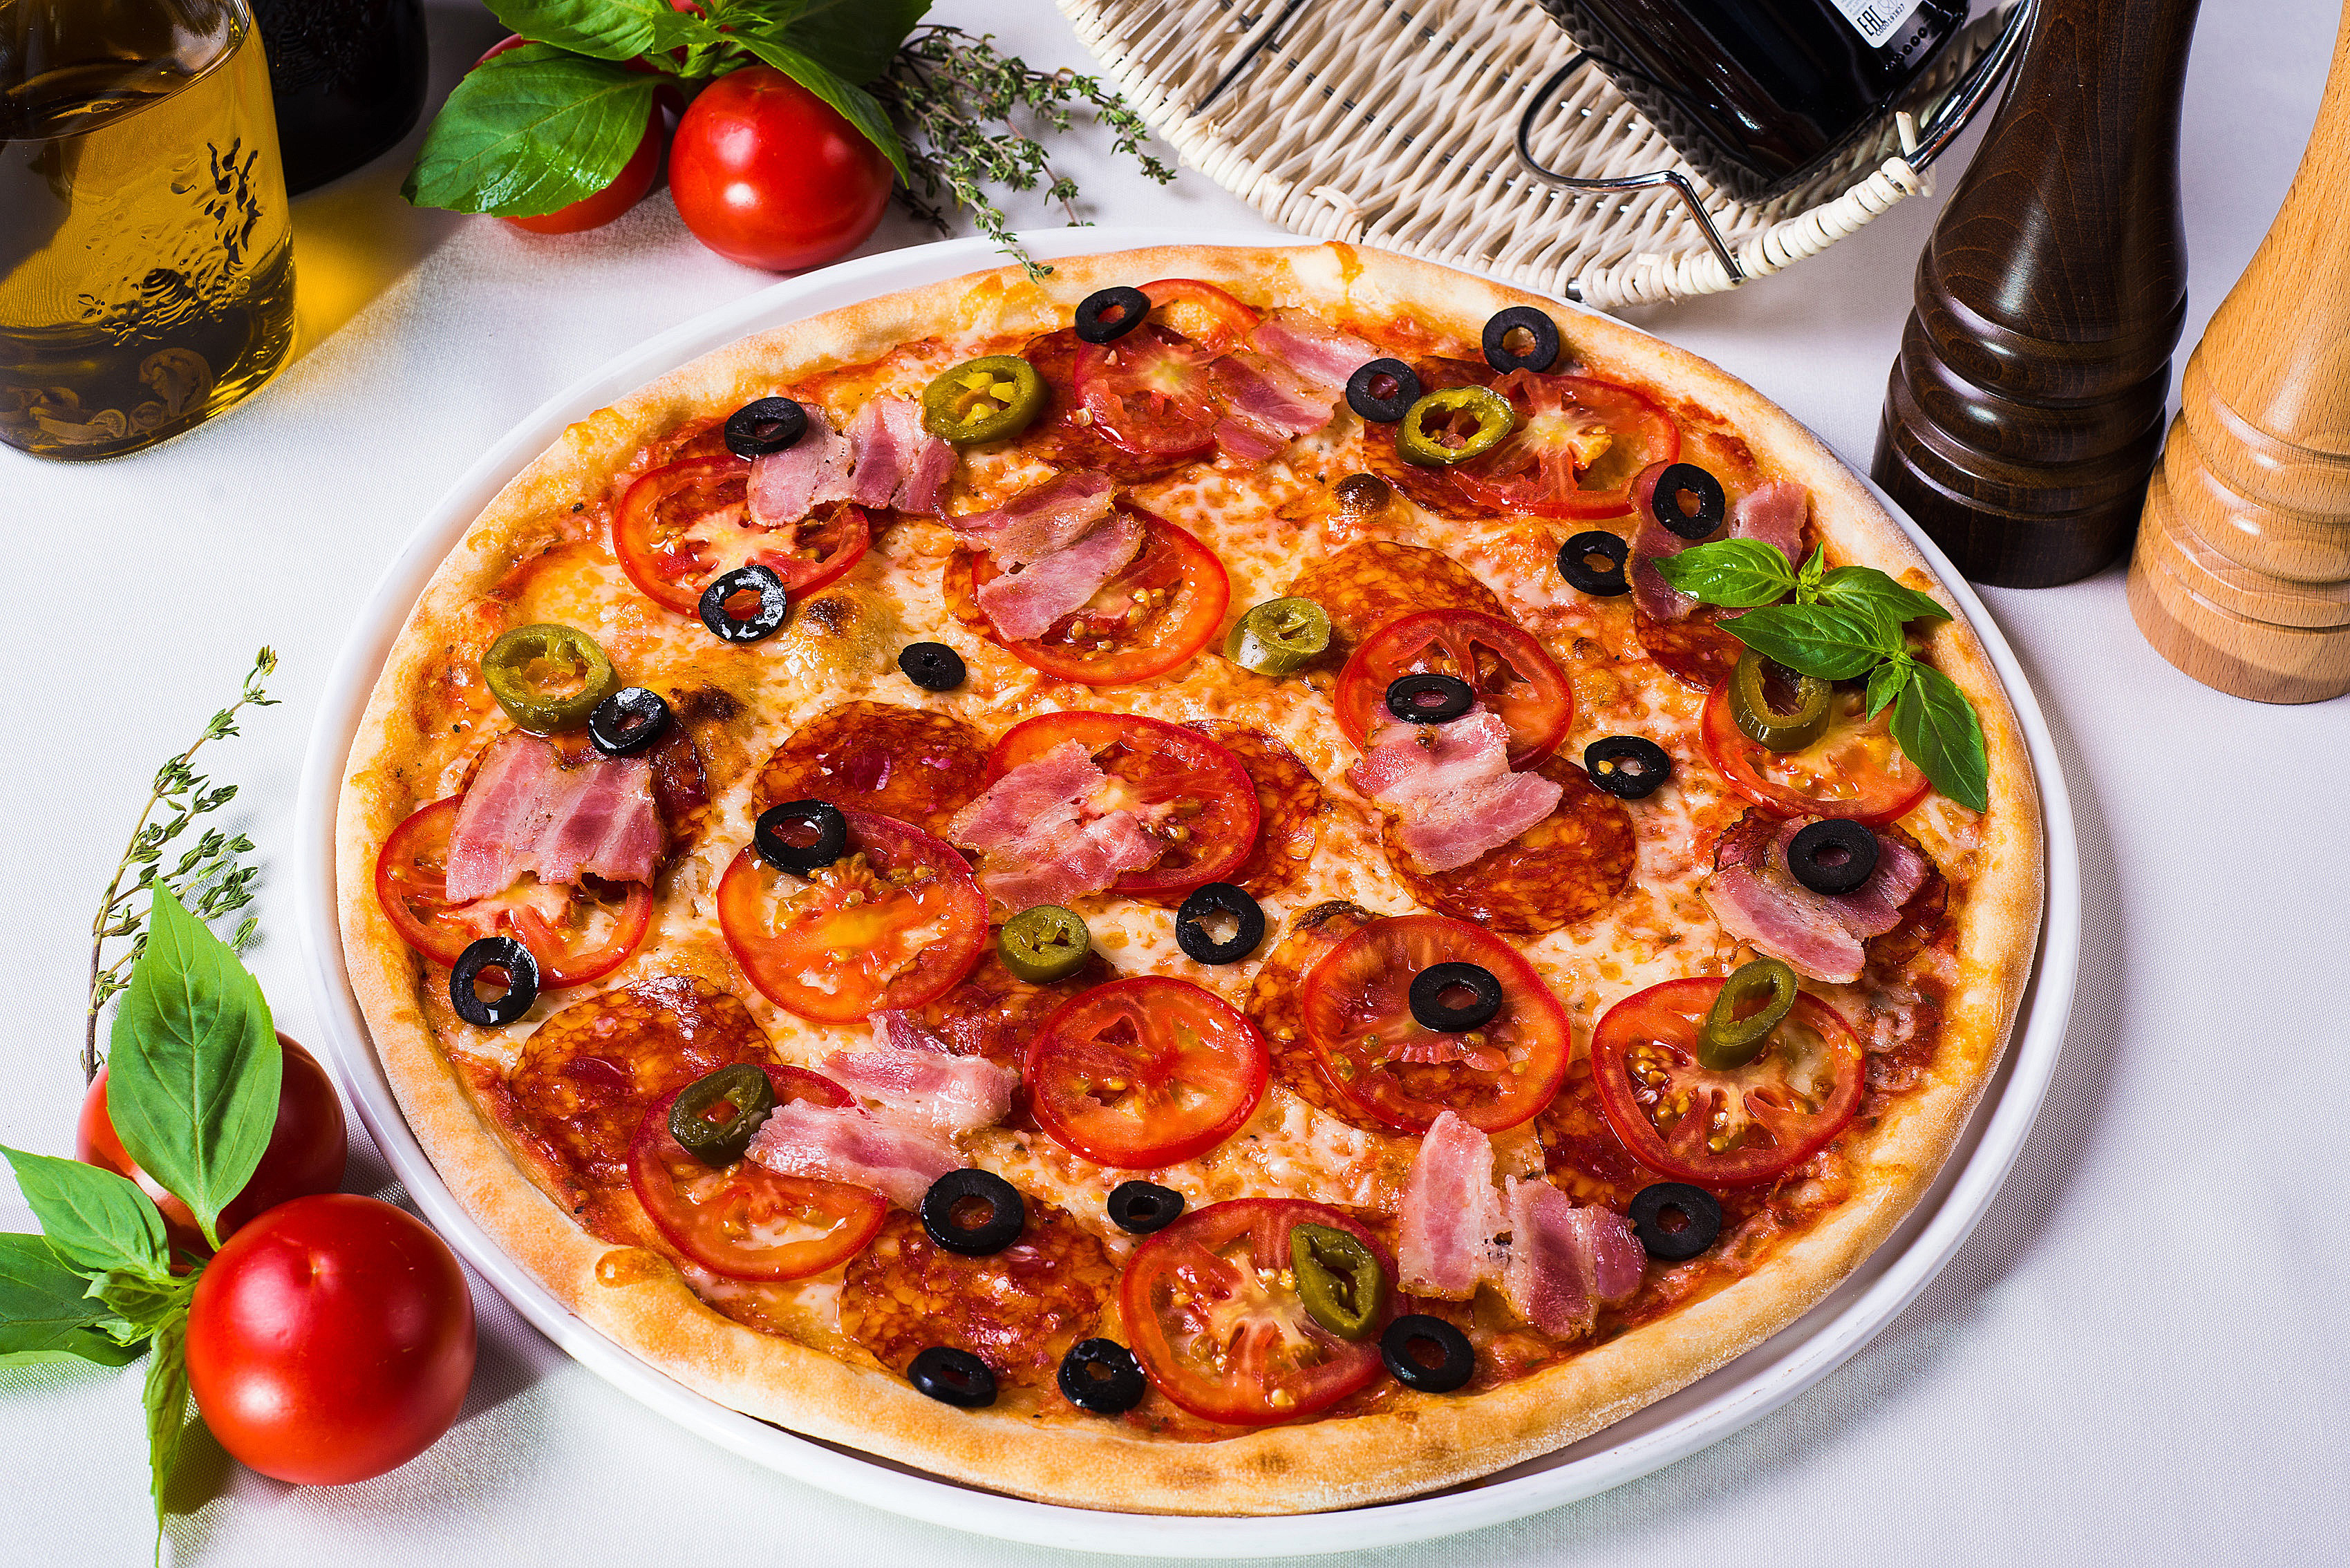 Какое блюдо пицца. Пицца салями пепперони. Салями маслины пицца помидор. Пицца пепперони с помидорами. Пицца пепперони с маслинами.